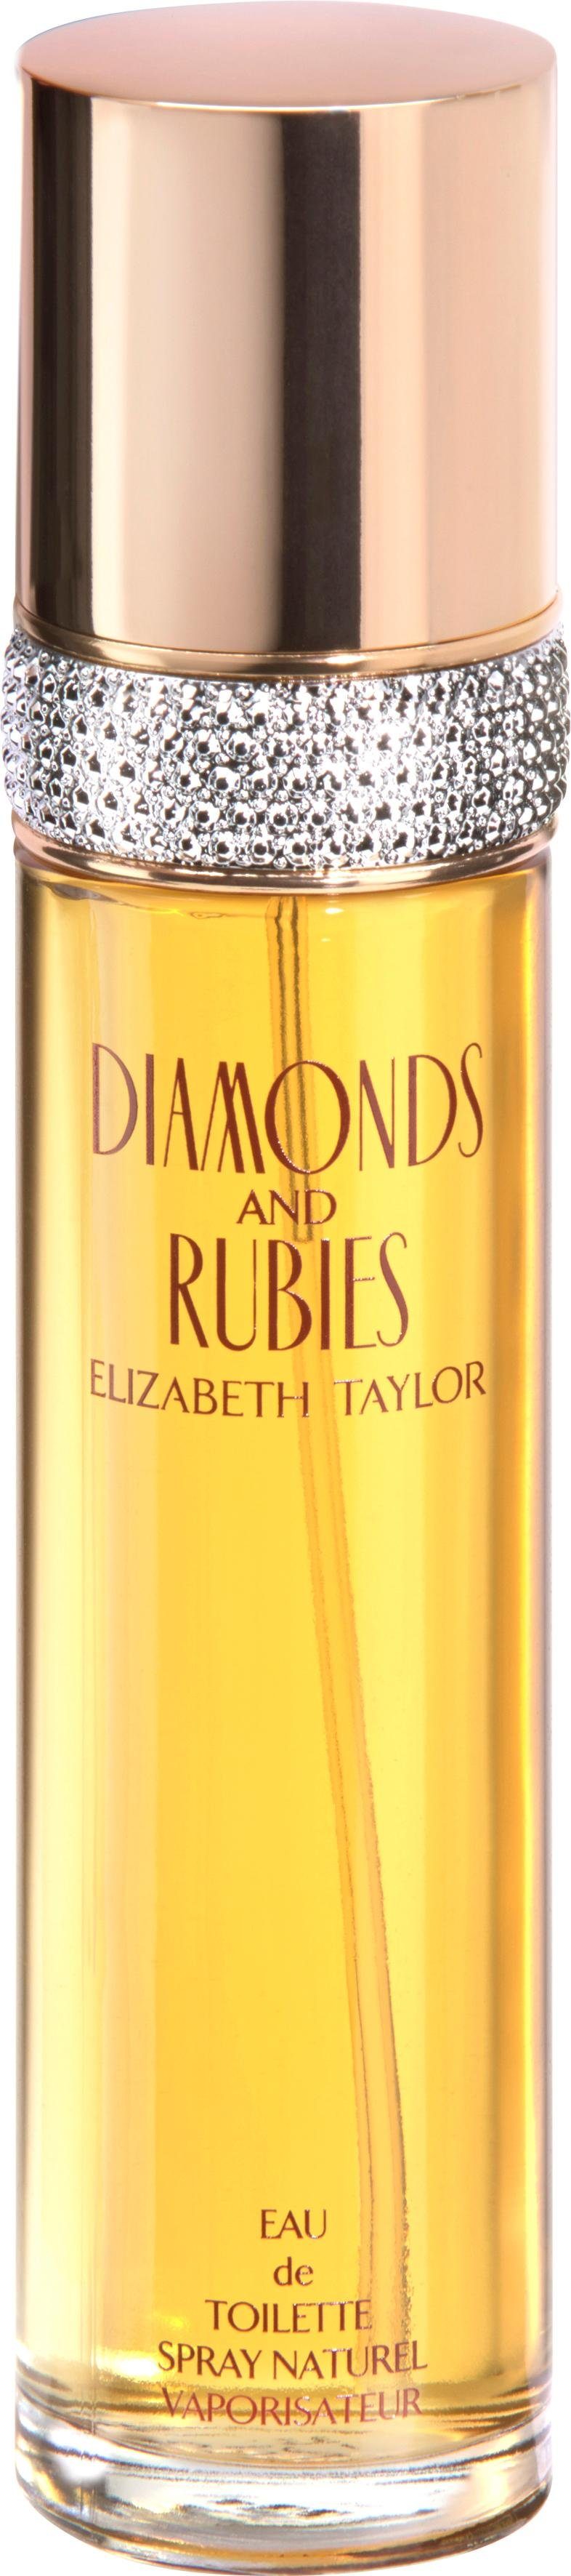 Eau & Diamonds Rubies Elizabeth Taylor Toilette de